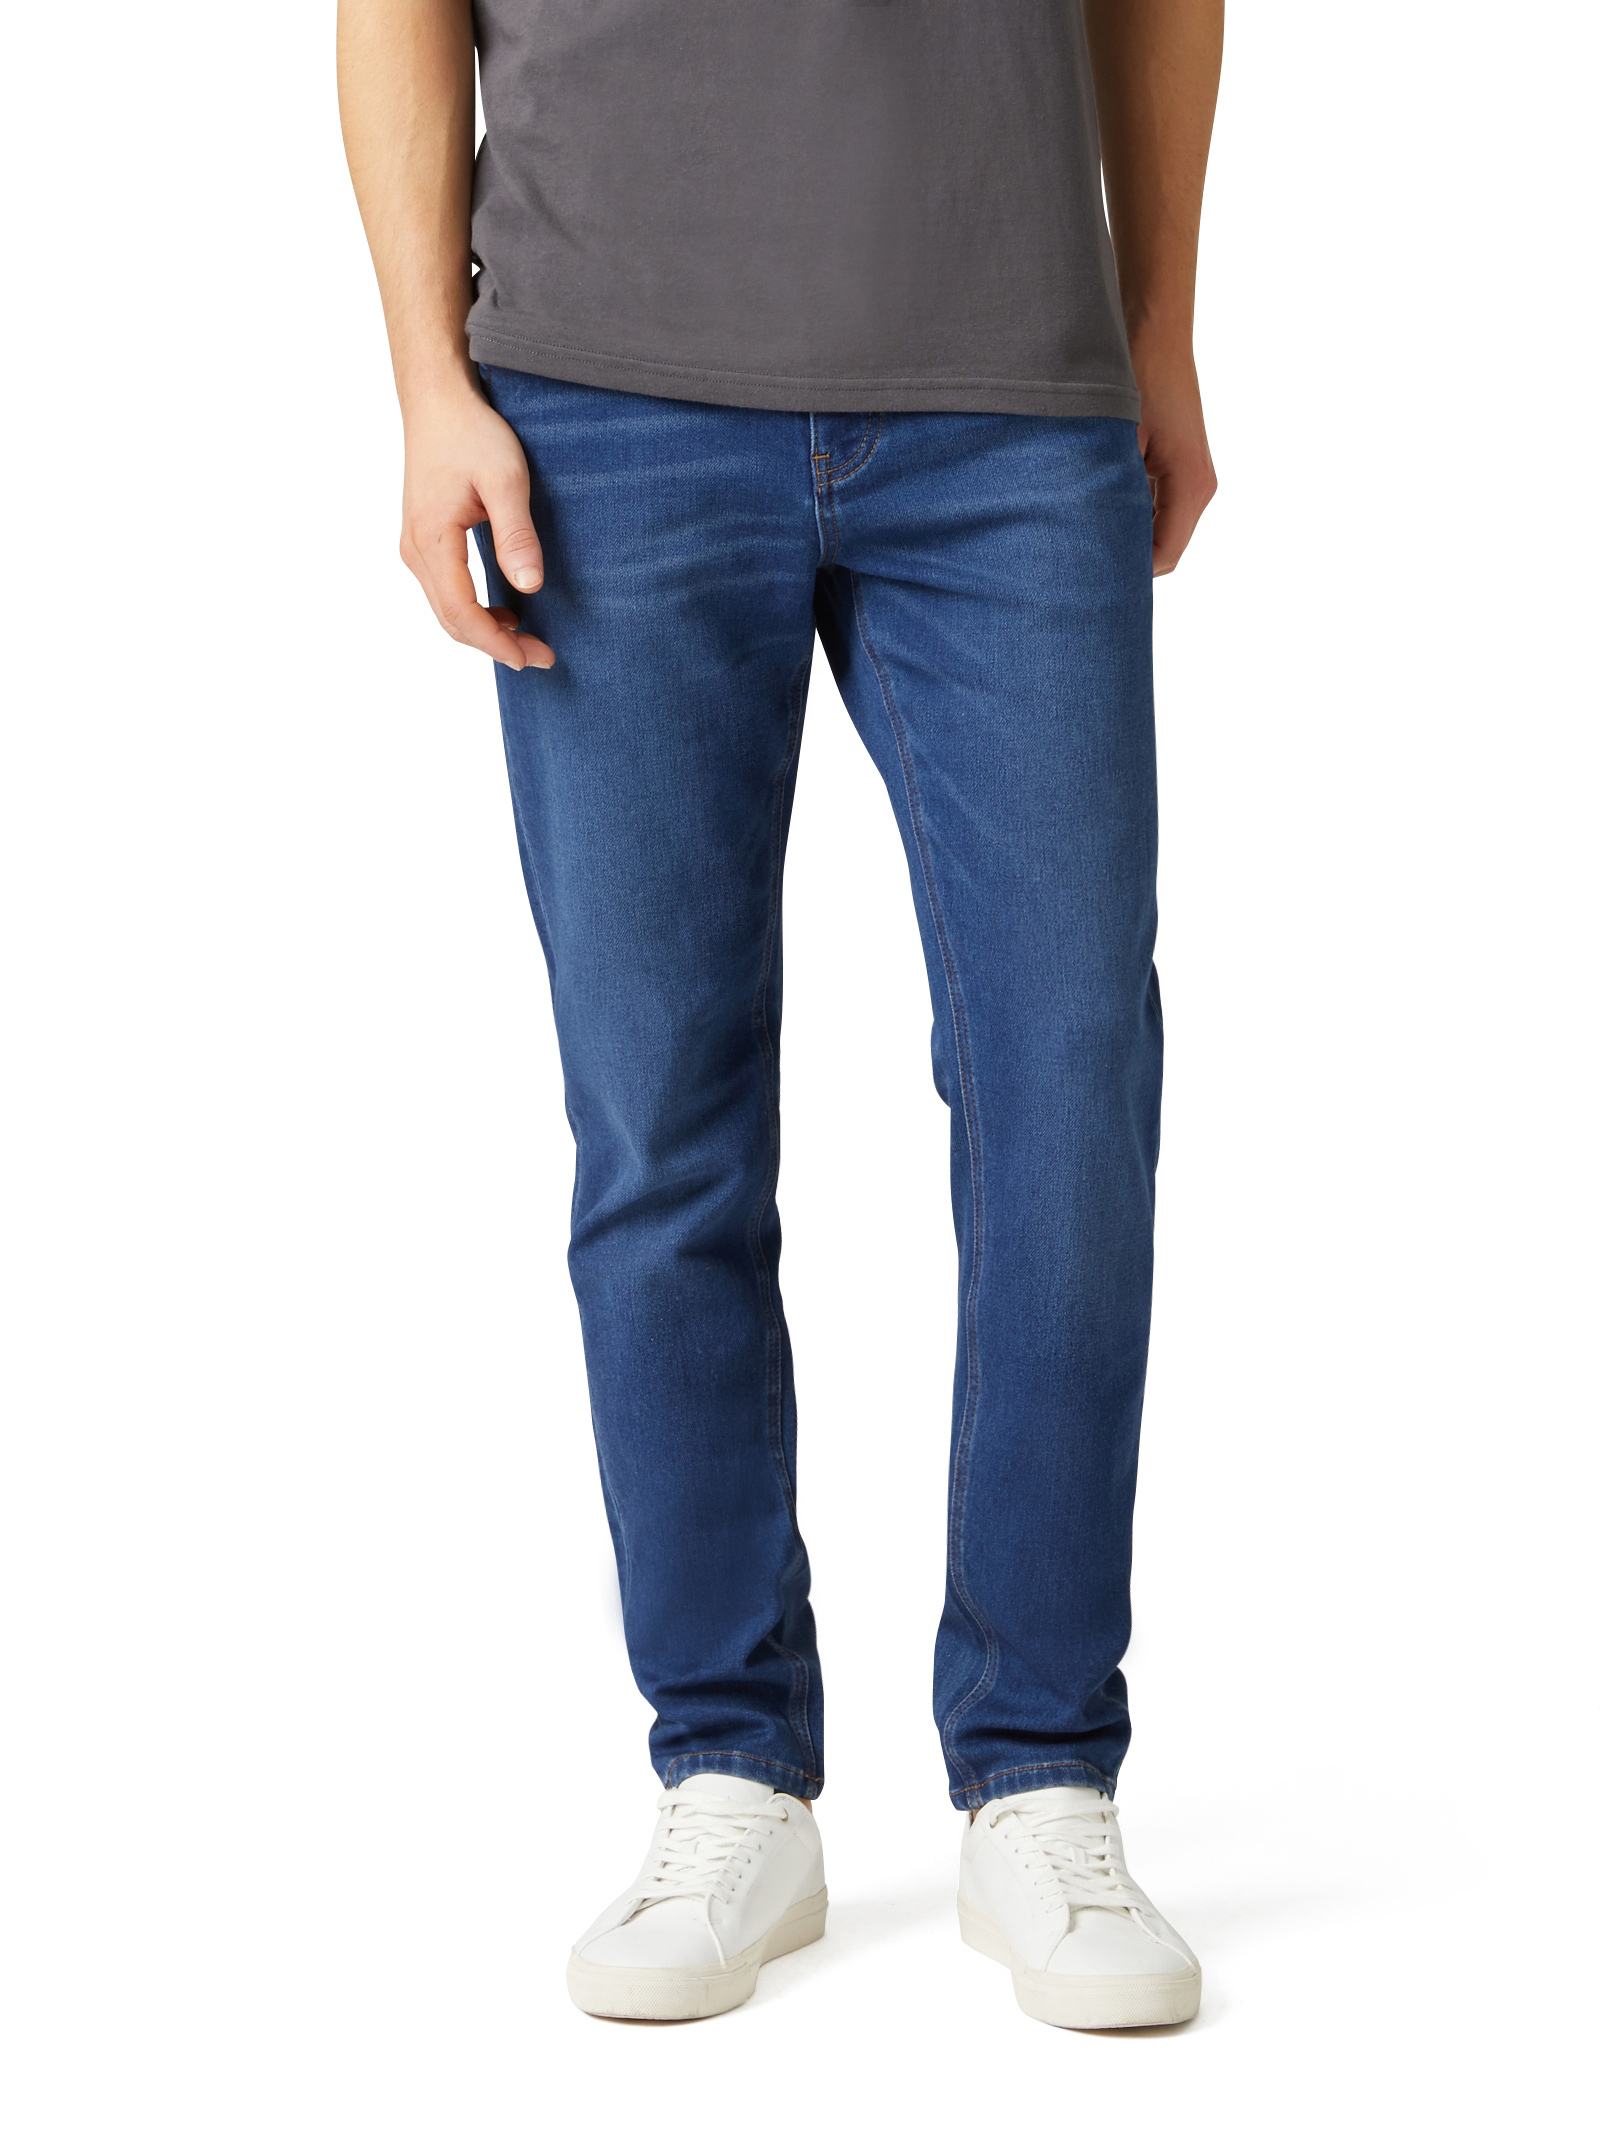 Ecqkame Men's Classic 6-Pocket Loose Flex Jean Clearance Men's Side Pocket  Trousers With Zipper Placket Skinny Jeans Blue S